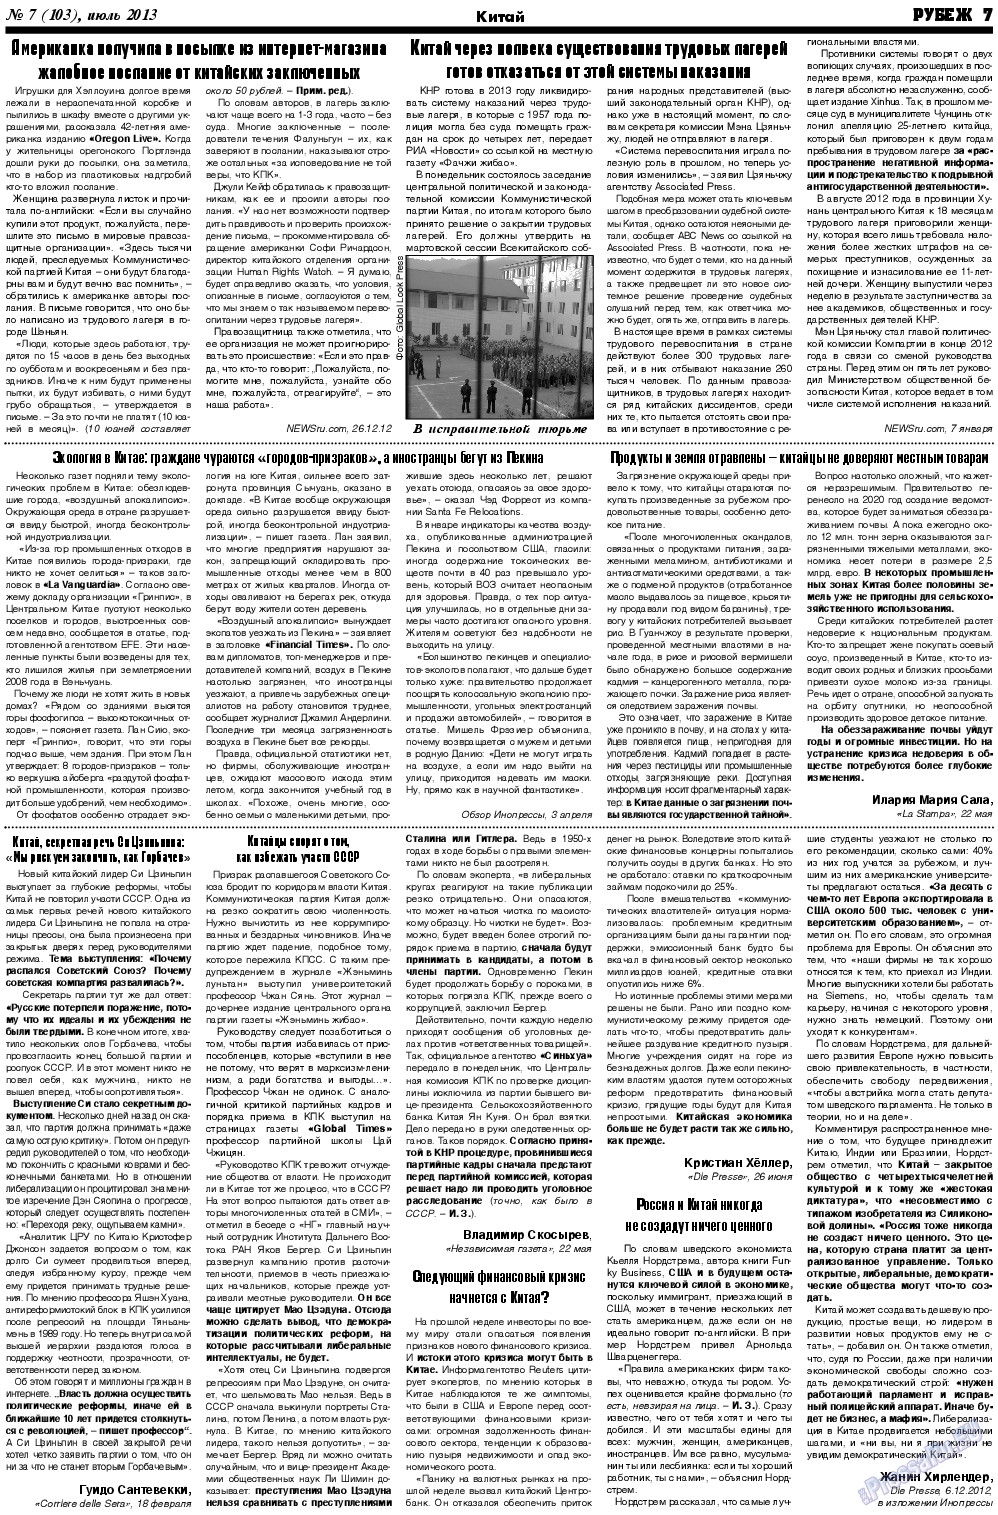 Рубеж, газета. 2013 №7 стр.7